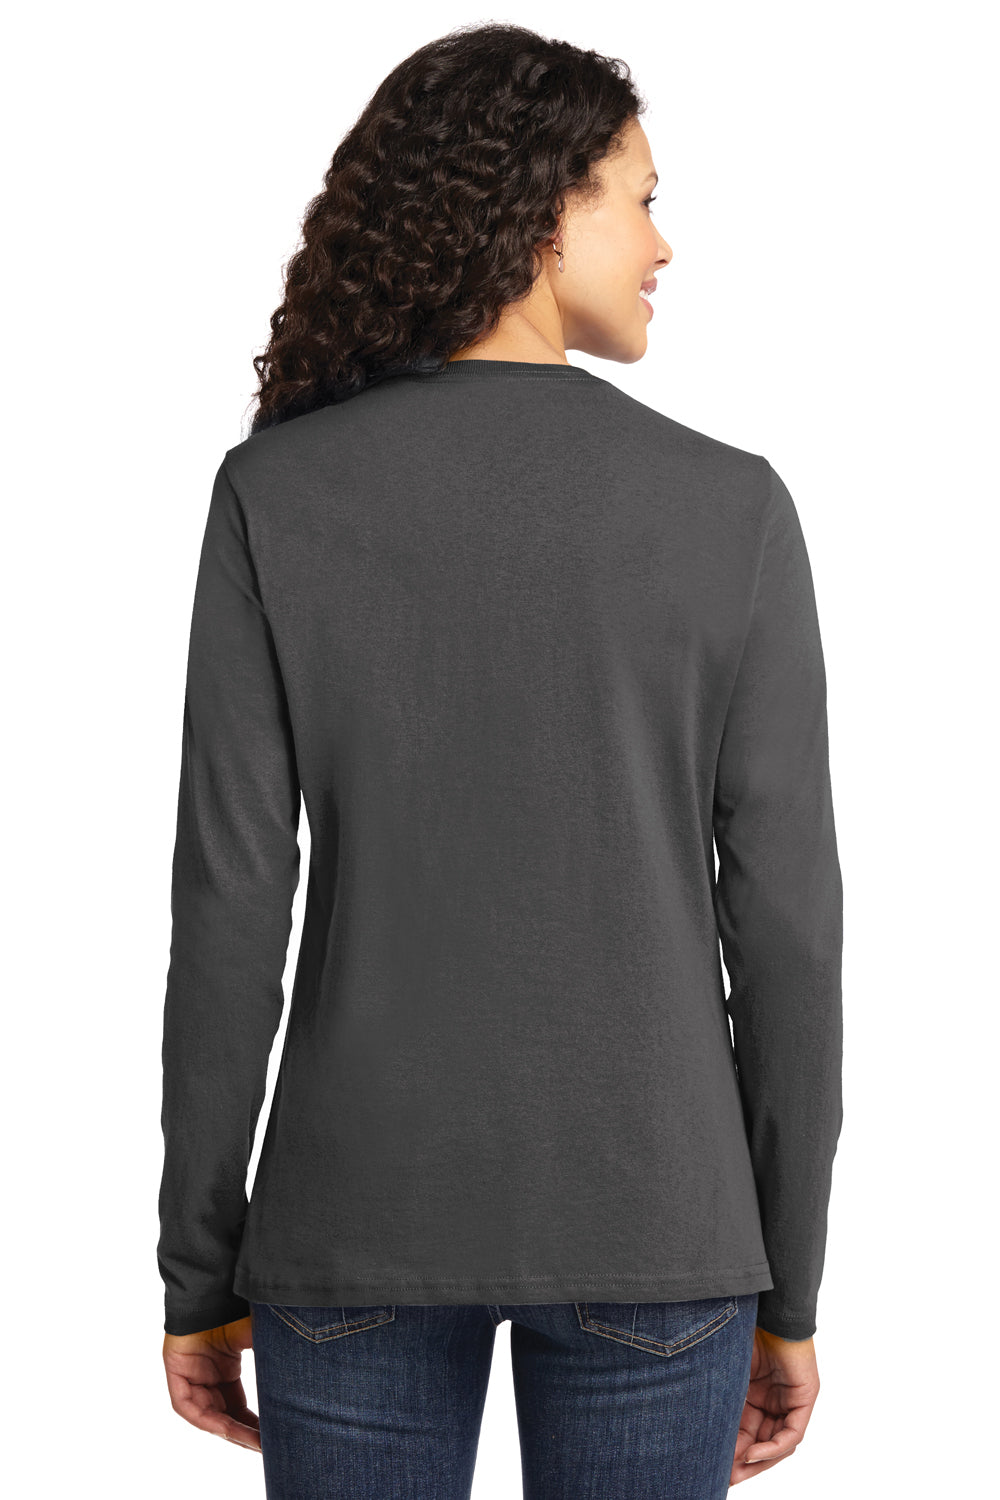 Port & Company LPC54LS Womens Core Long Sleeve Crewneck T-Shirt Charcoal Grey Back